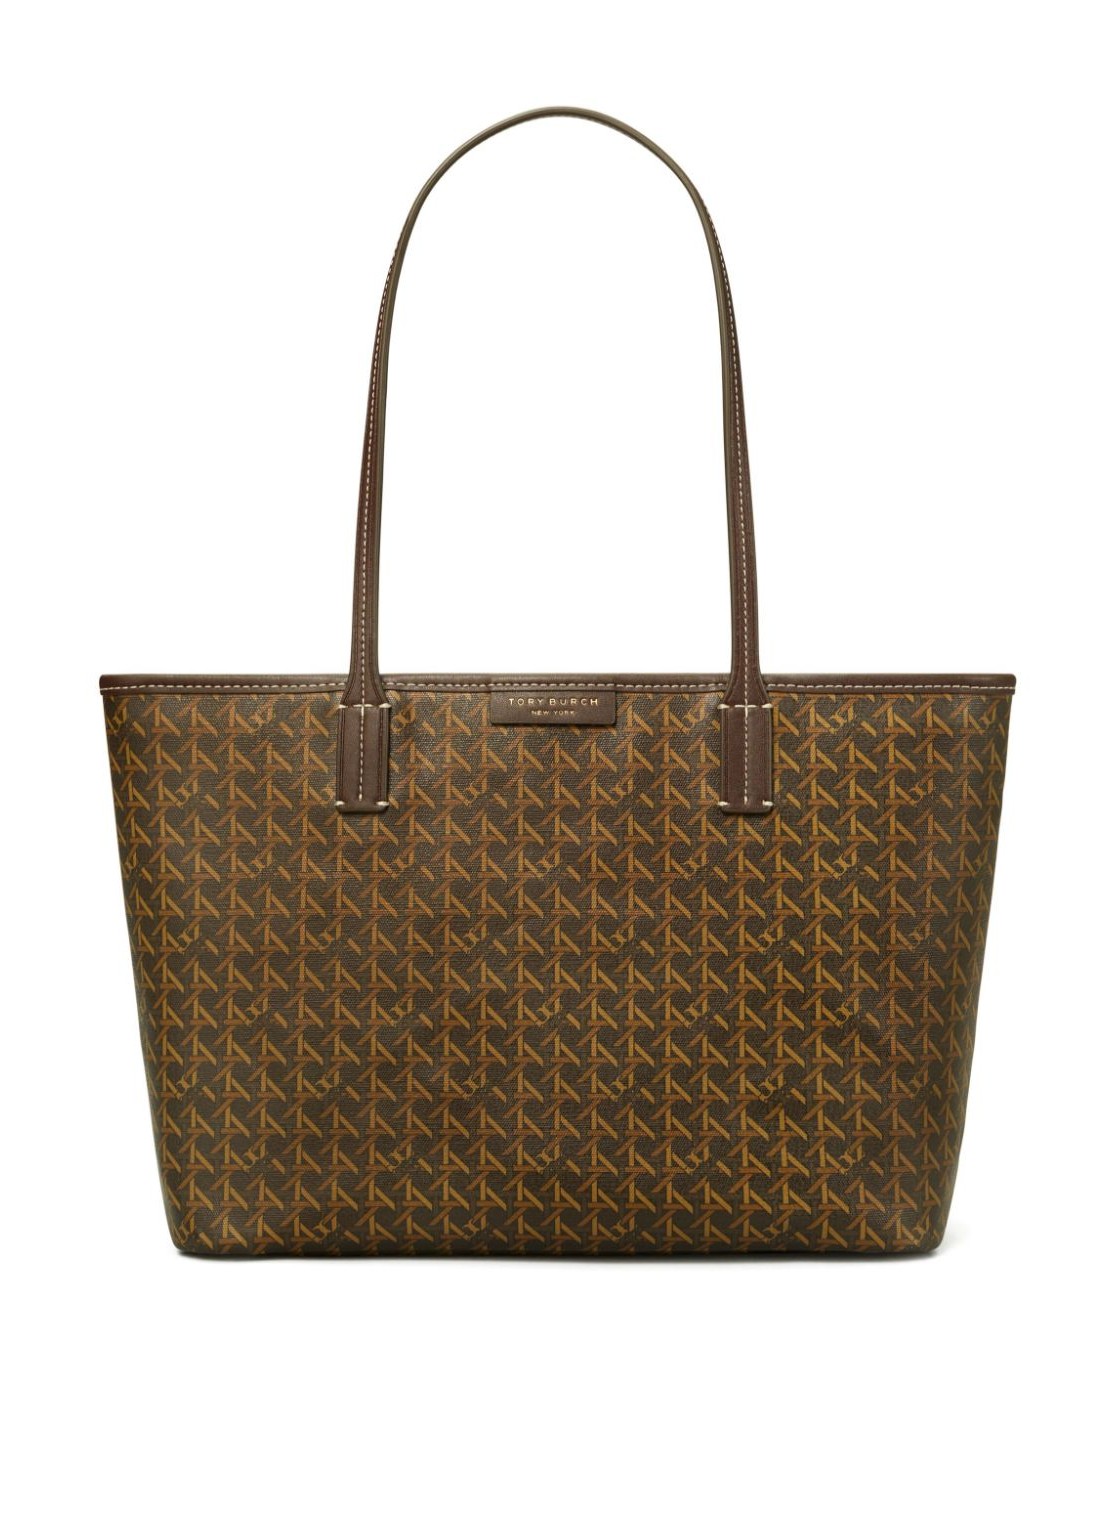 Handbag tory burch handbag woman ever-ready small tote 147748207 207 talla marron
 